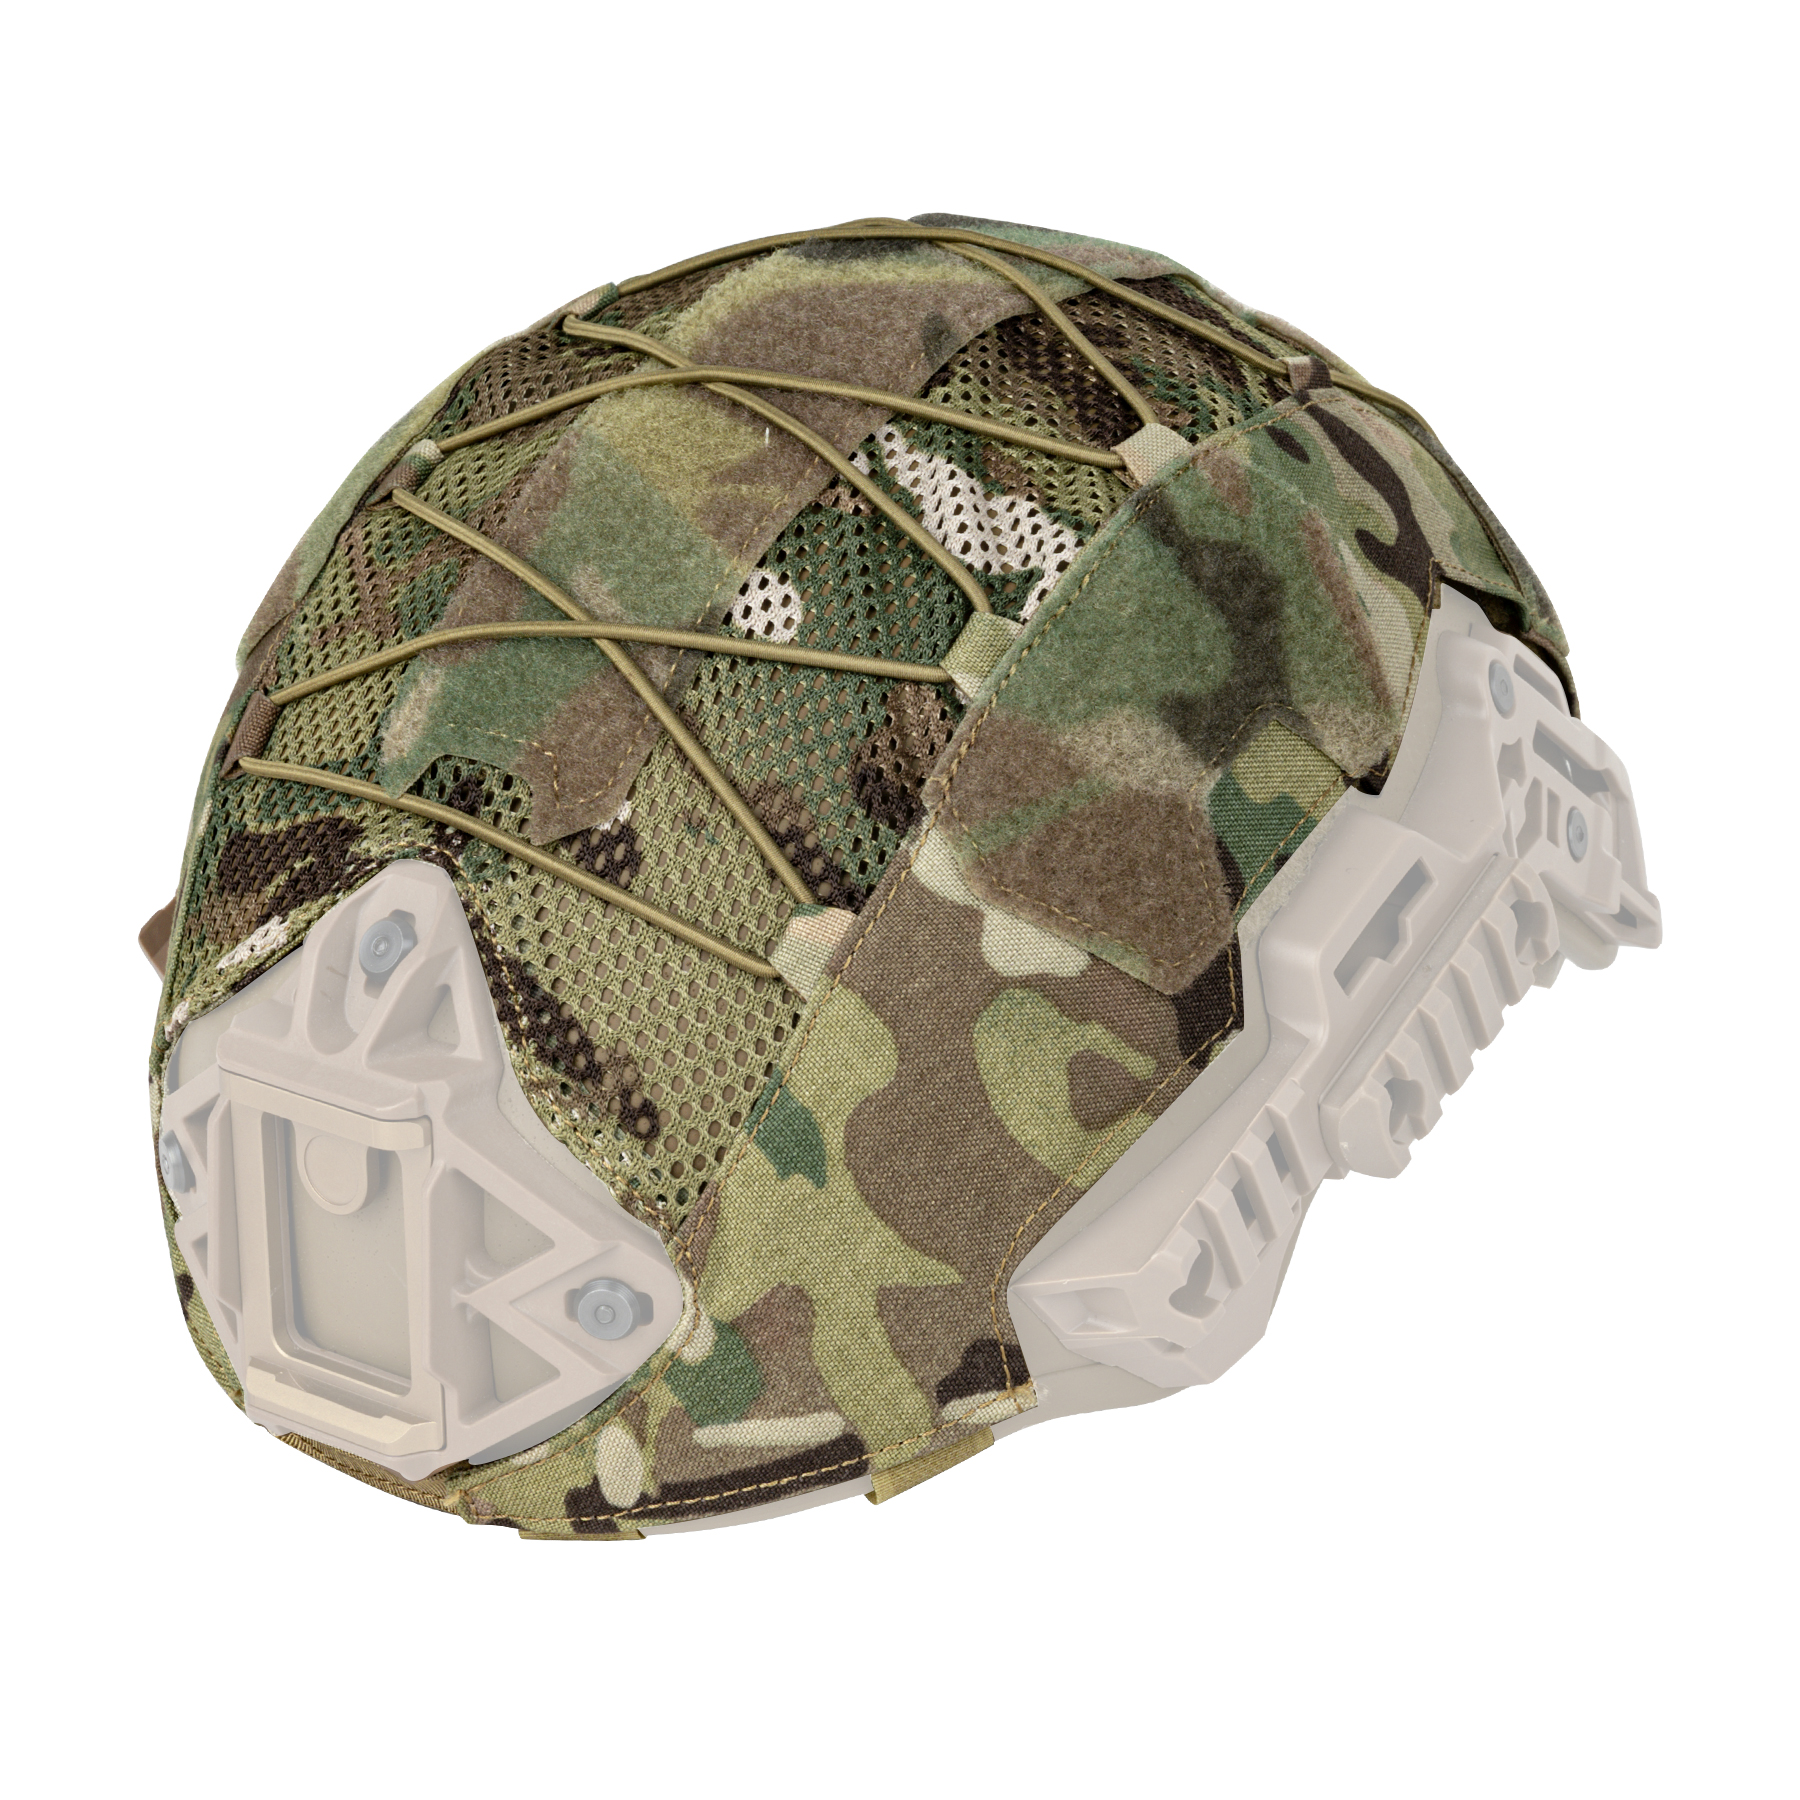 TOPTACPRO Tactical Helmet Cover For Wendy Helmet in Size M/L 500D Cordura Nylon 8802